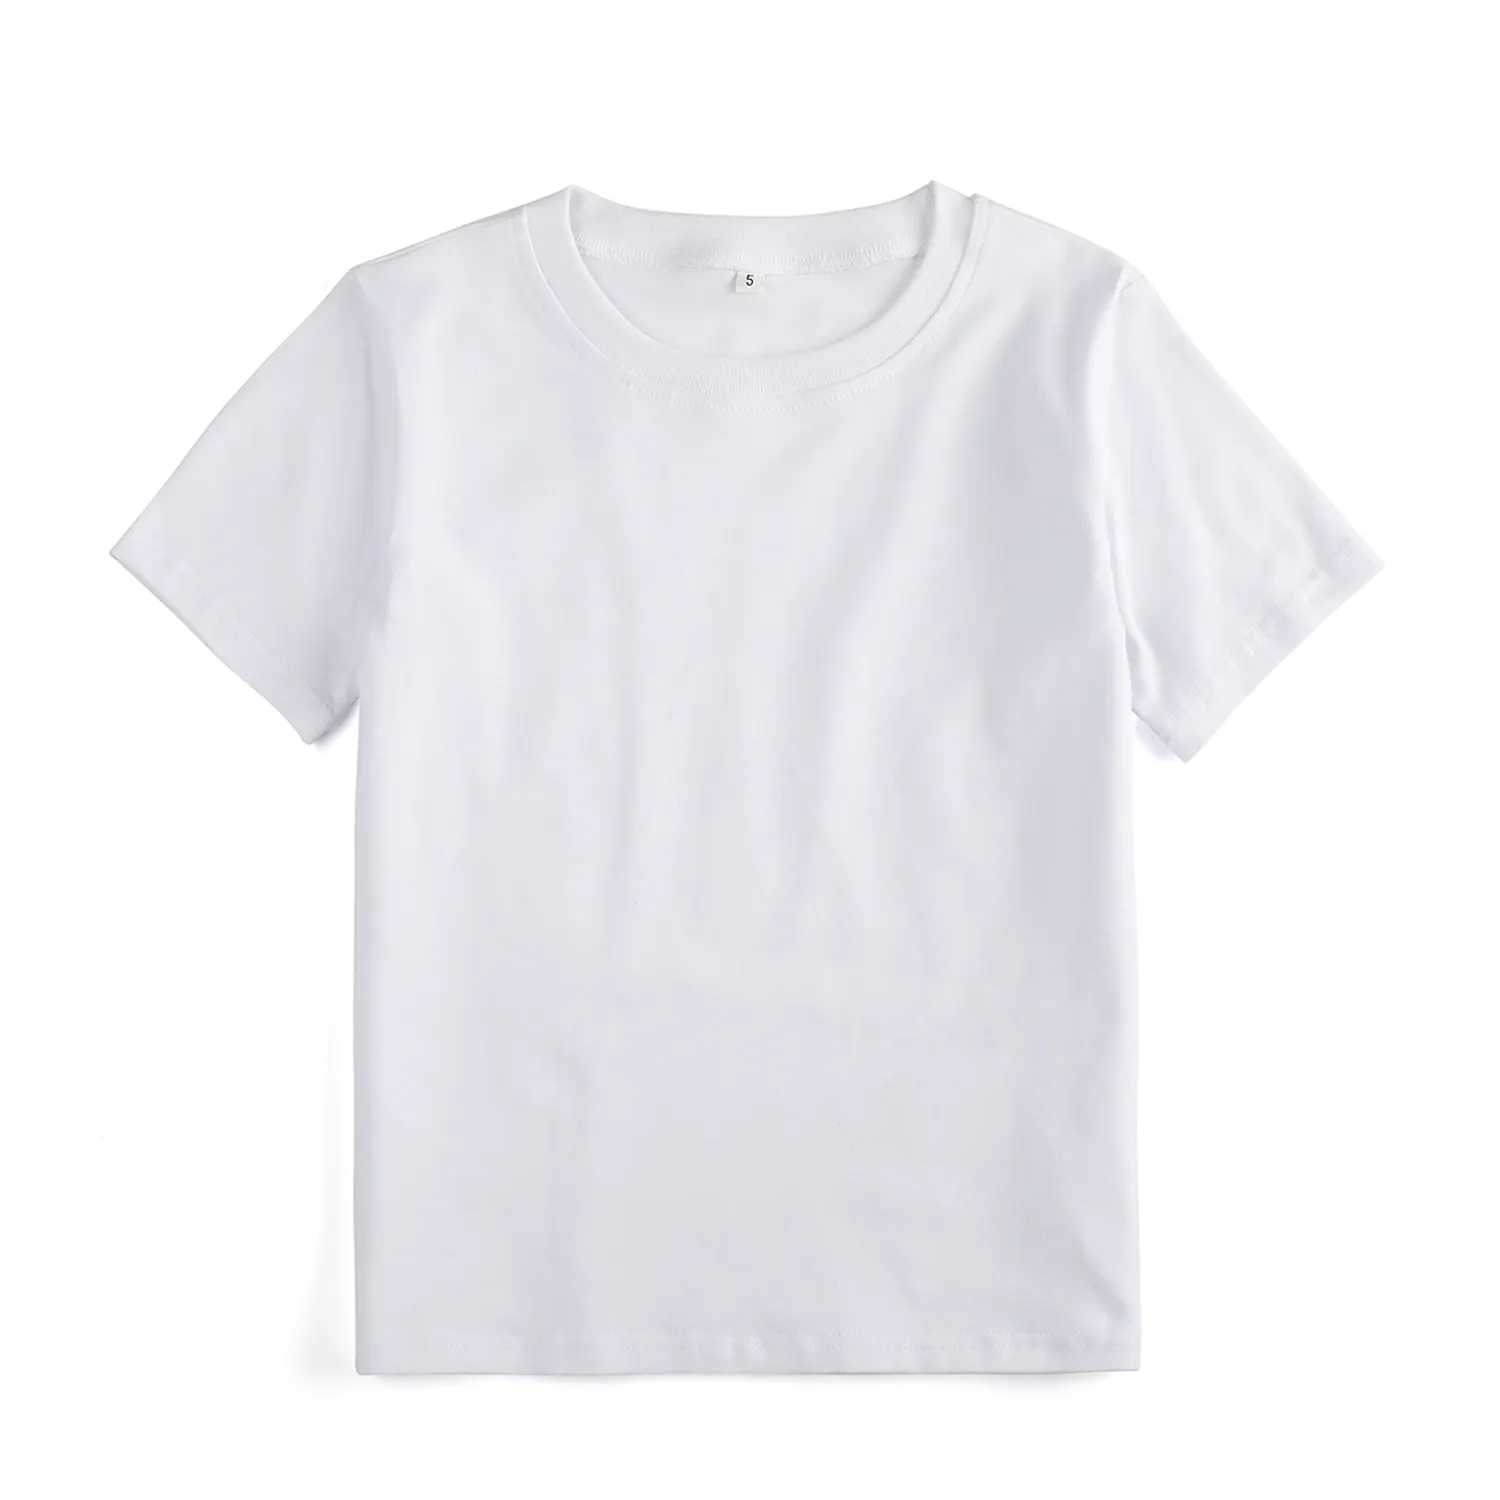 Summer Soft Cotton Kids White t-shirt Simple Design Toddler Boys t-shirts Clothing Wholesale